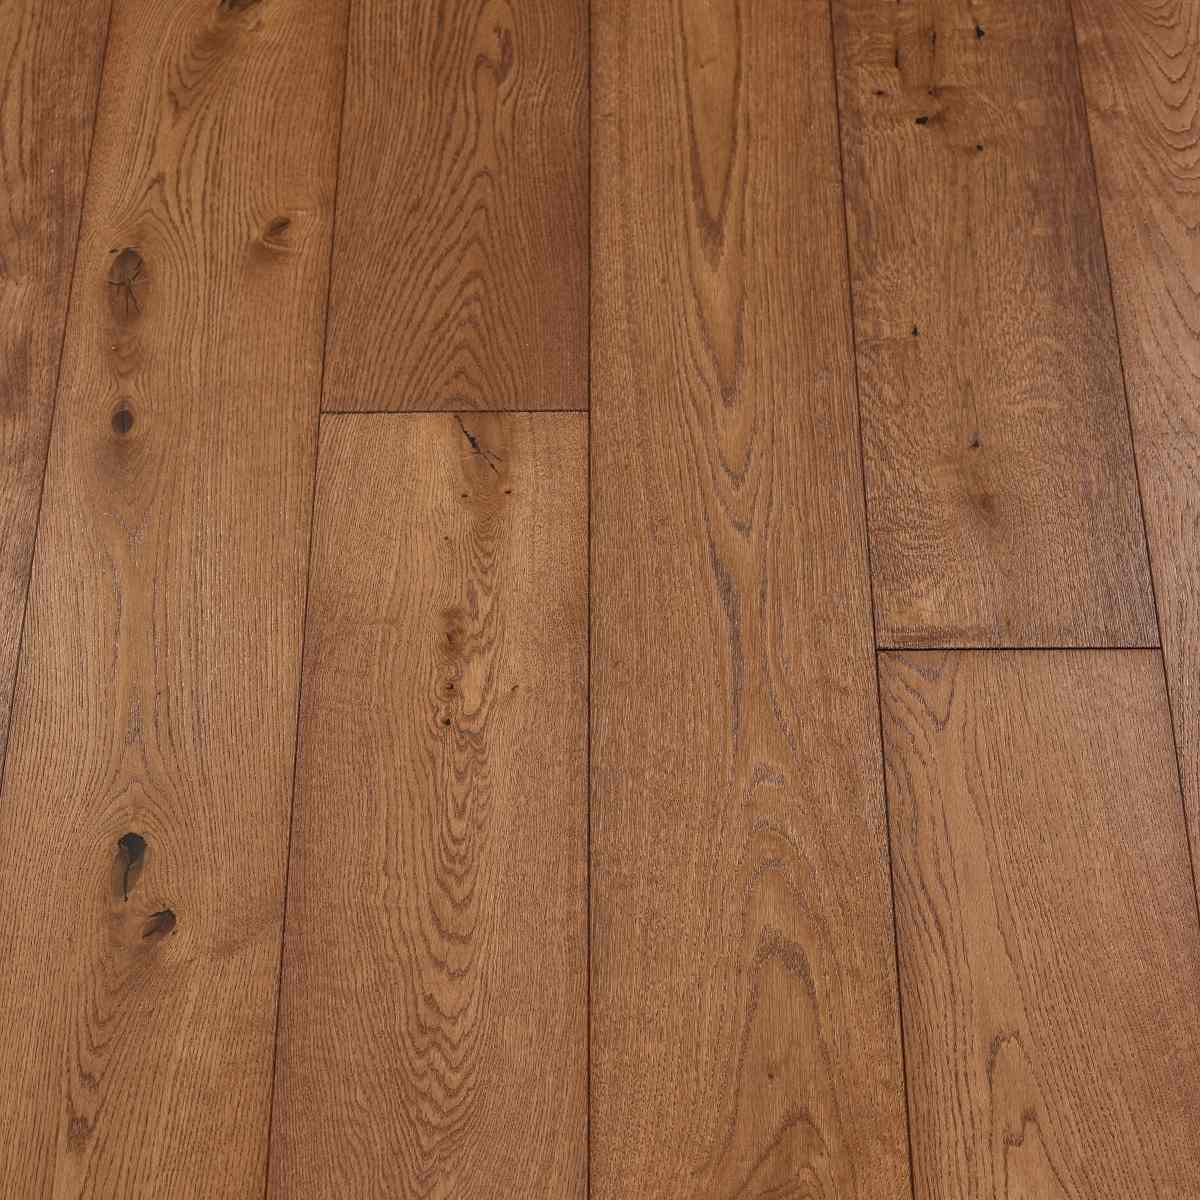 Main Resized Mahogany Woodflooring - image featuring Main Resized Mahogany wood flooring with a polished finish and a classic mahogany color, adding sophistication to any space.